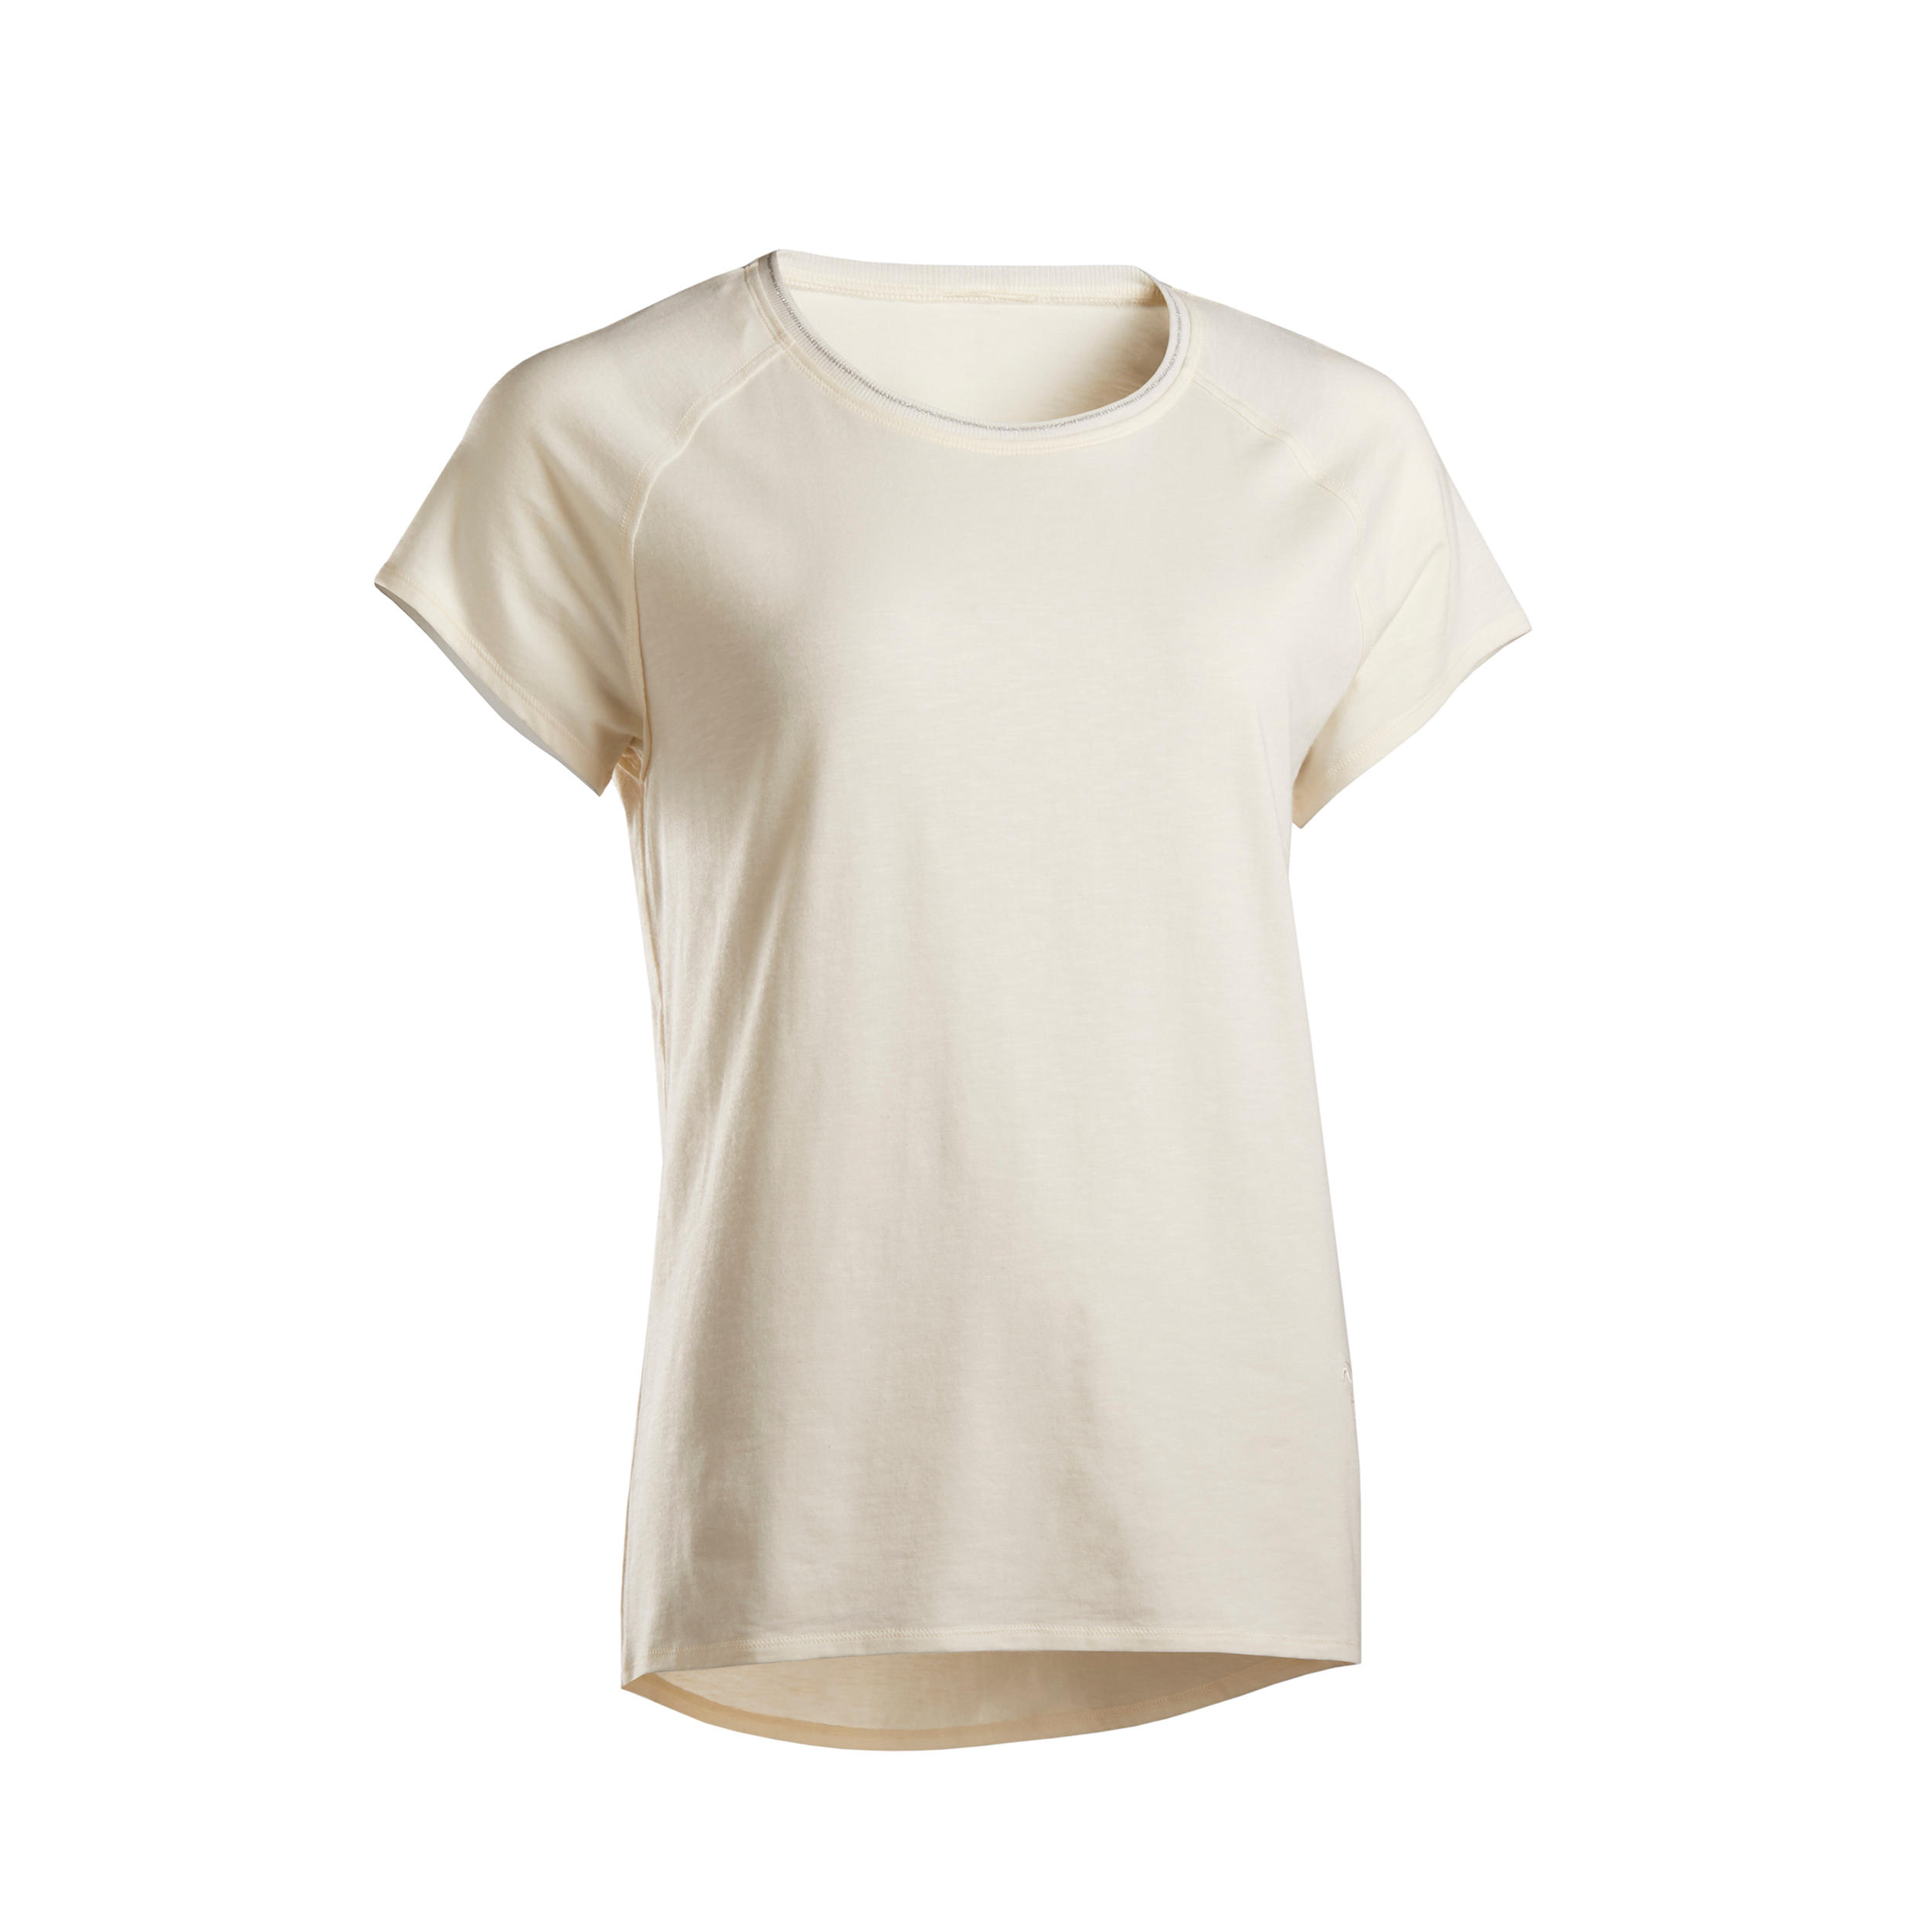 KIMJALY Women's Gentle Yoga T-Shirt - Beige